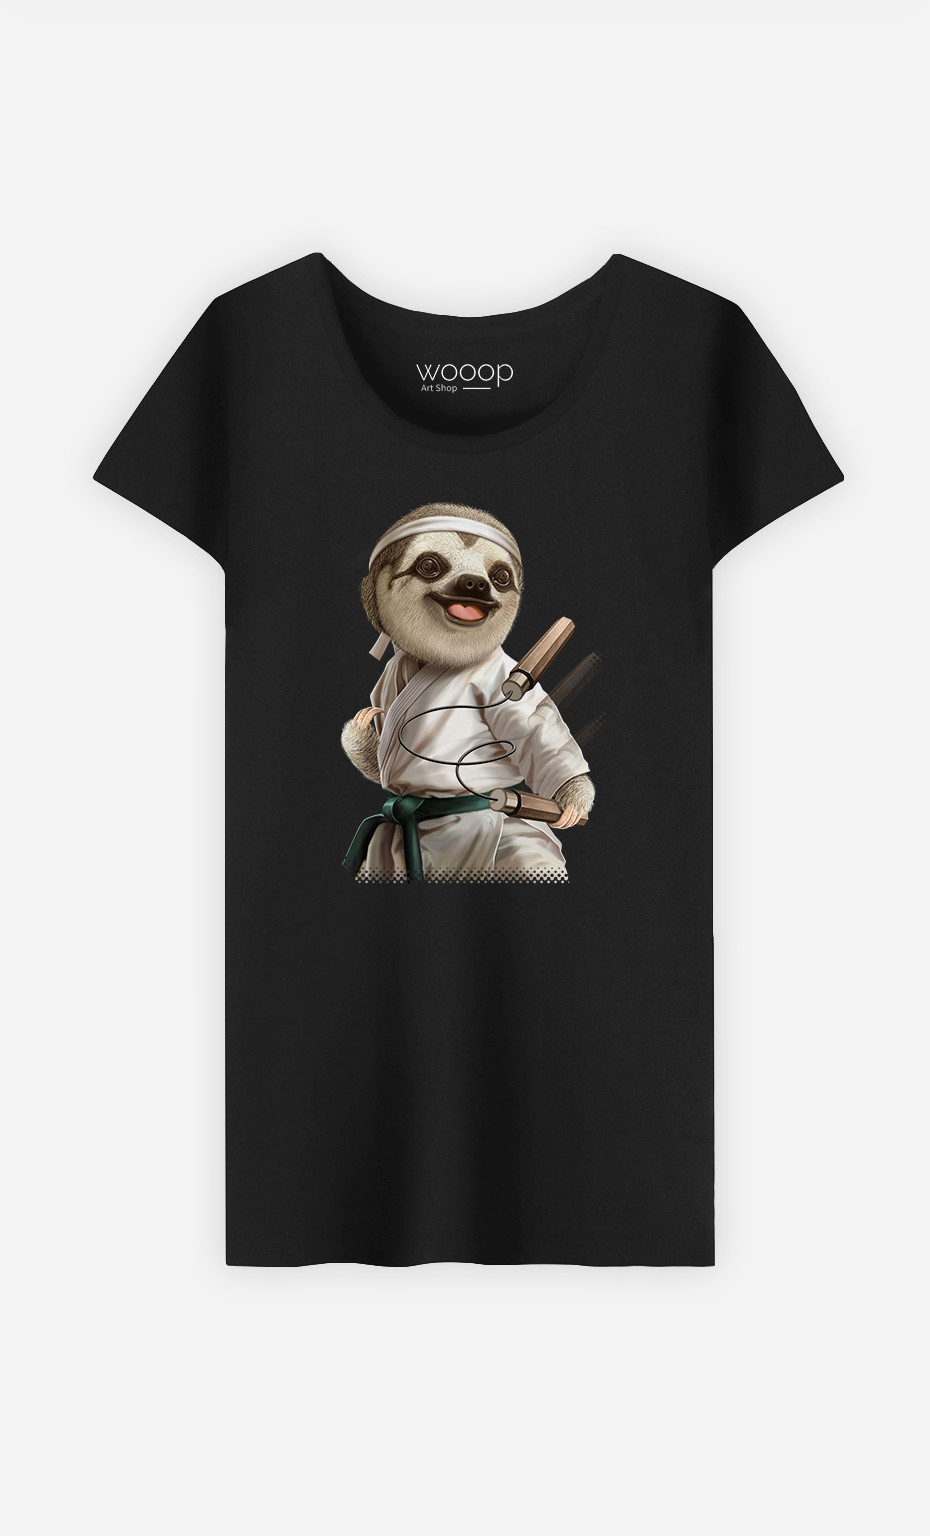 T-shirt Woman Karate Sloth